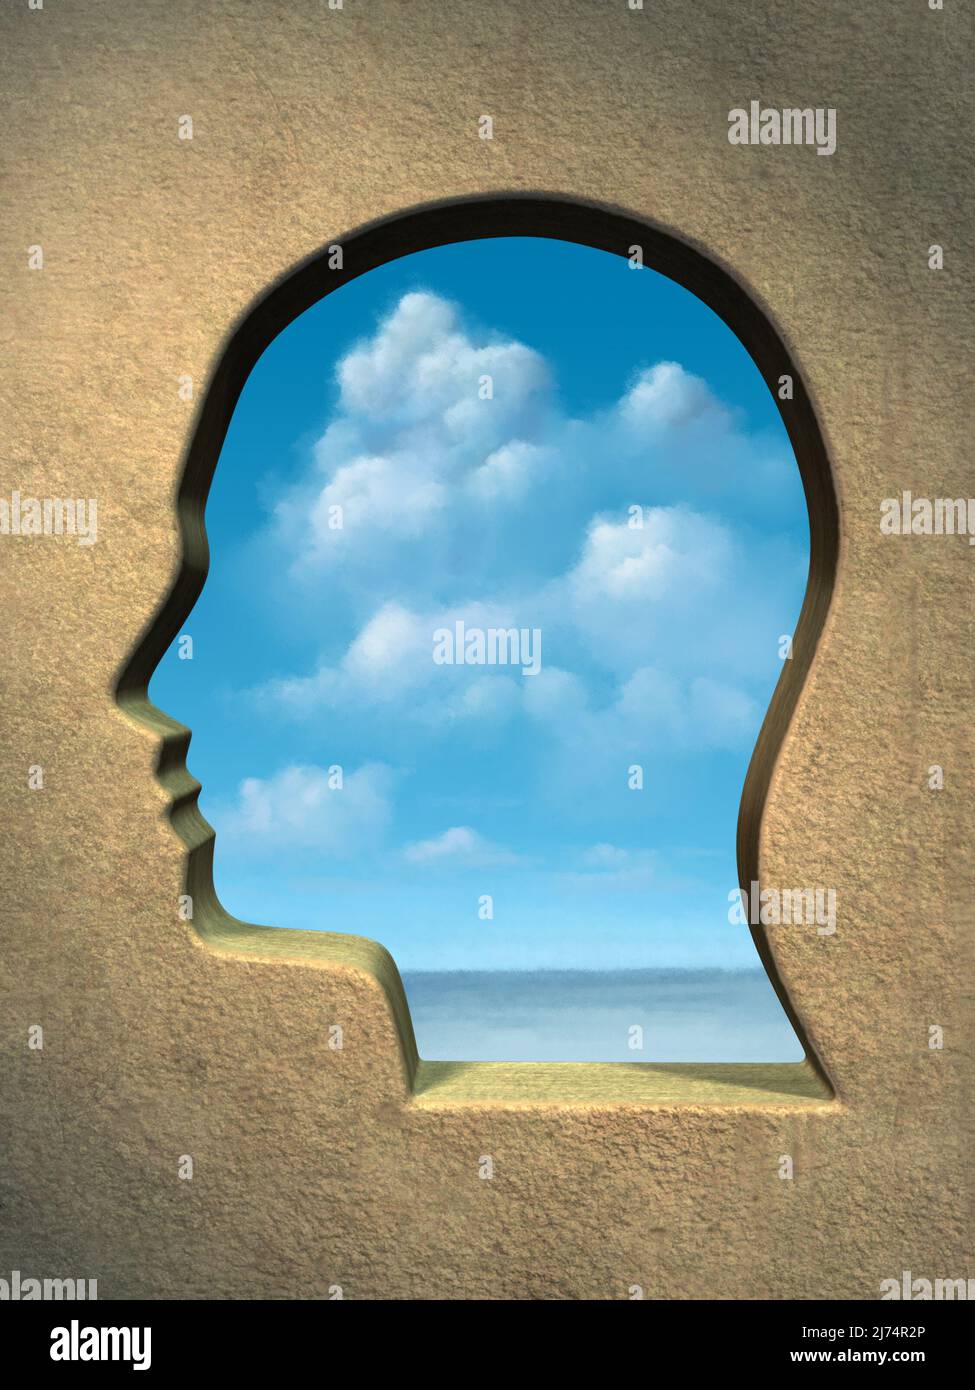 A bright blue sky seen through an head shaped window. Digital illustration. Stock Photo